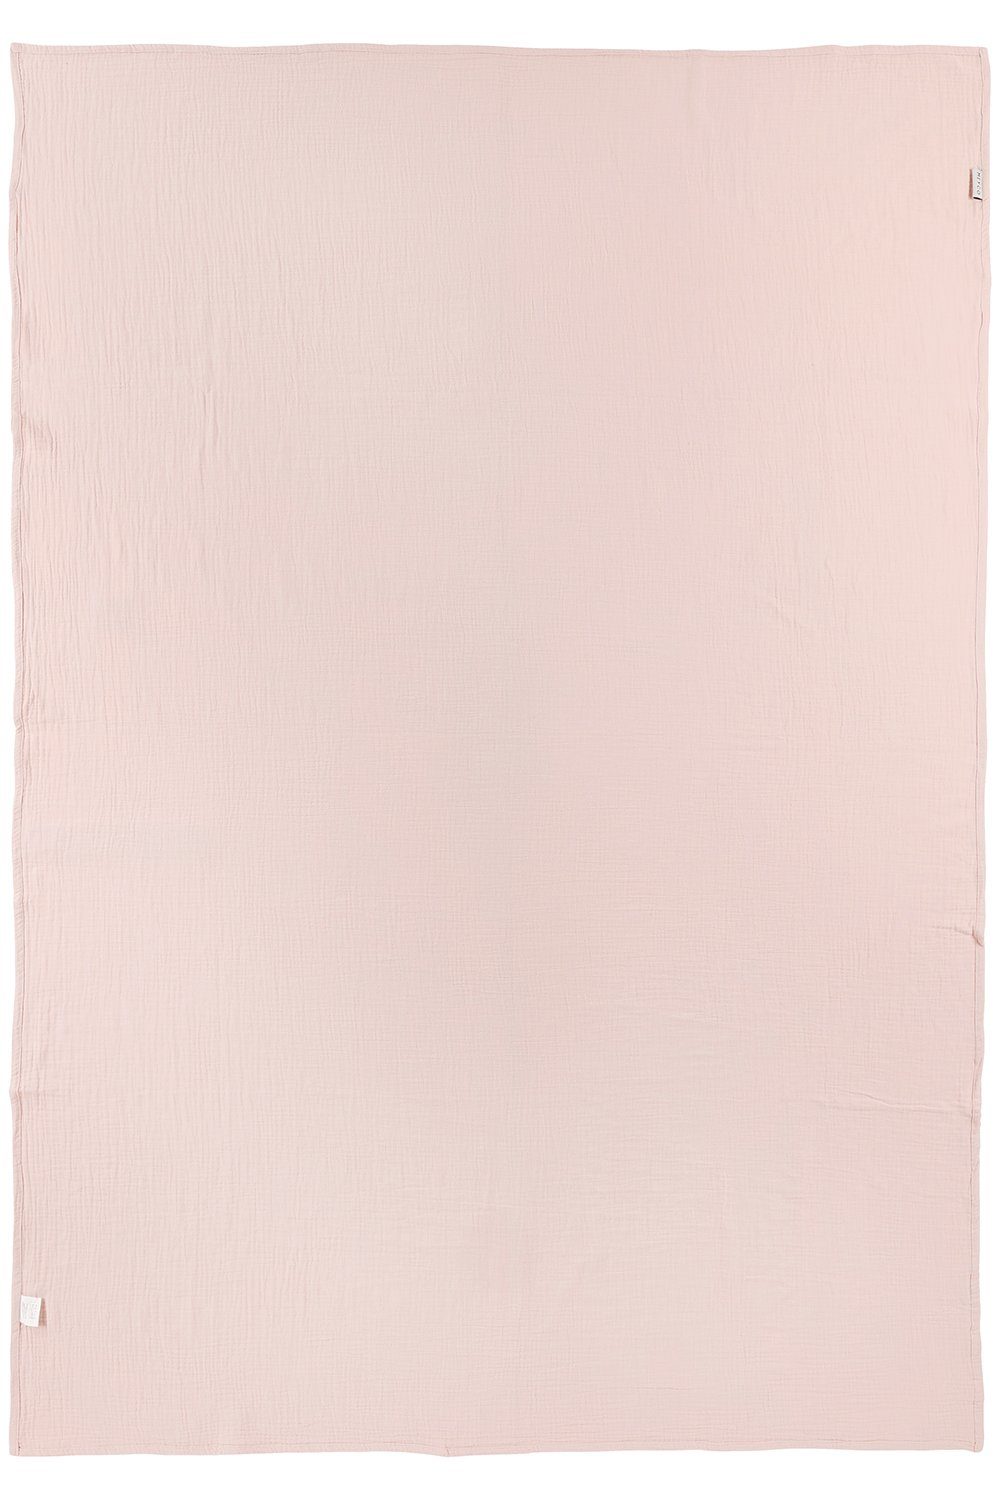 Pink, Soft Babydecke Uni Meyco Home, 140x200cm